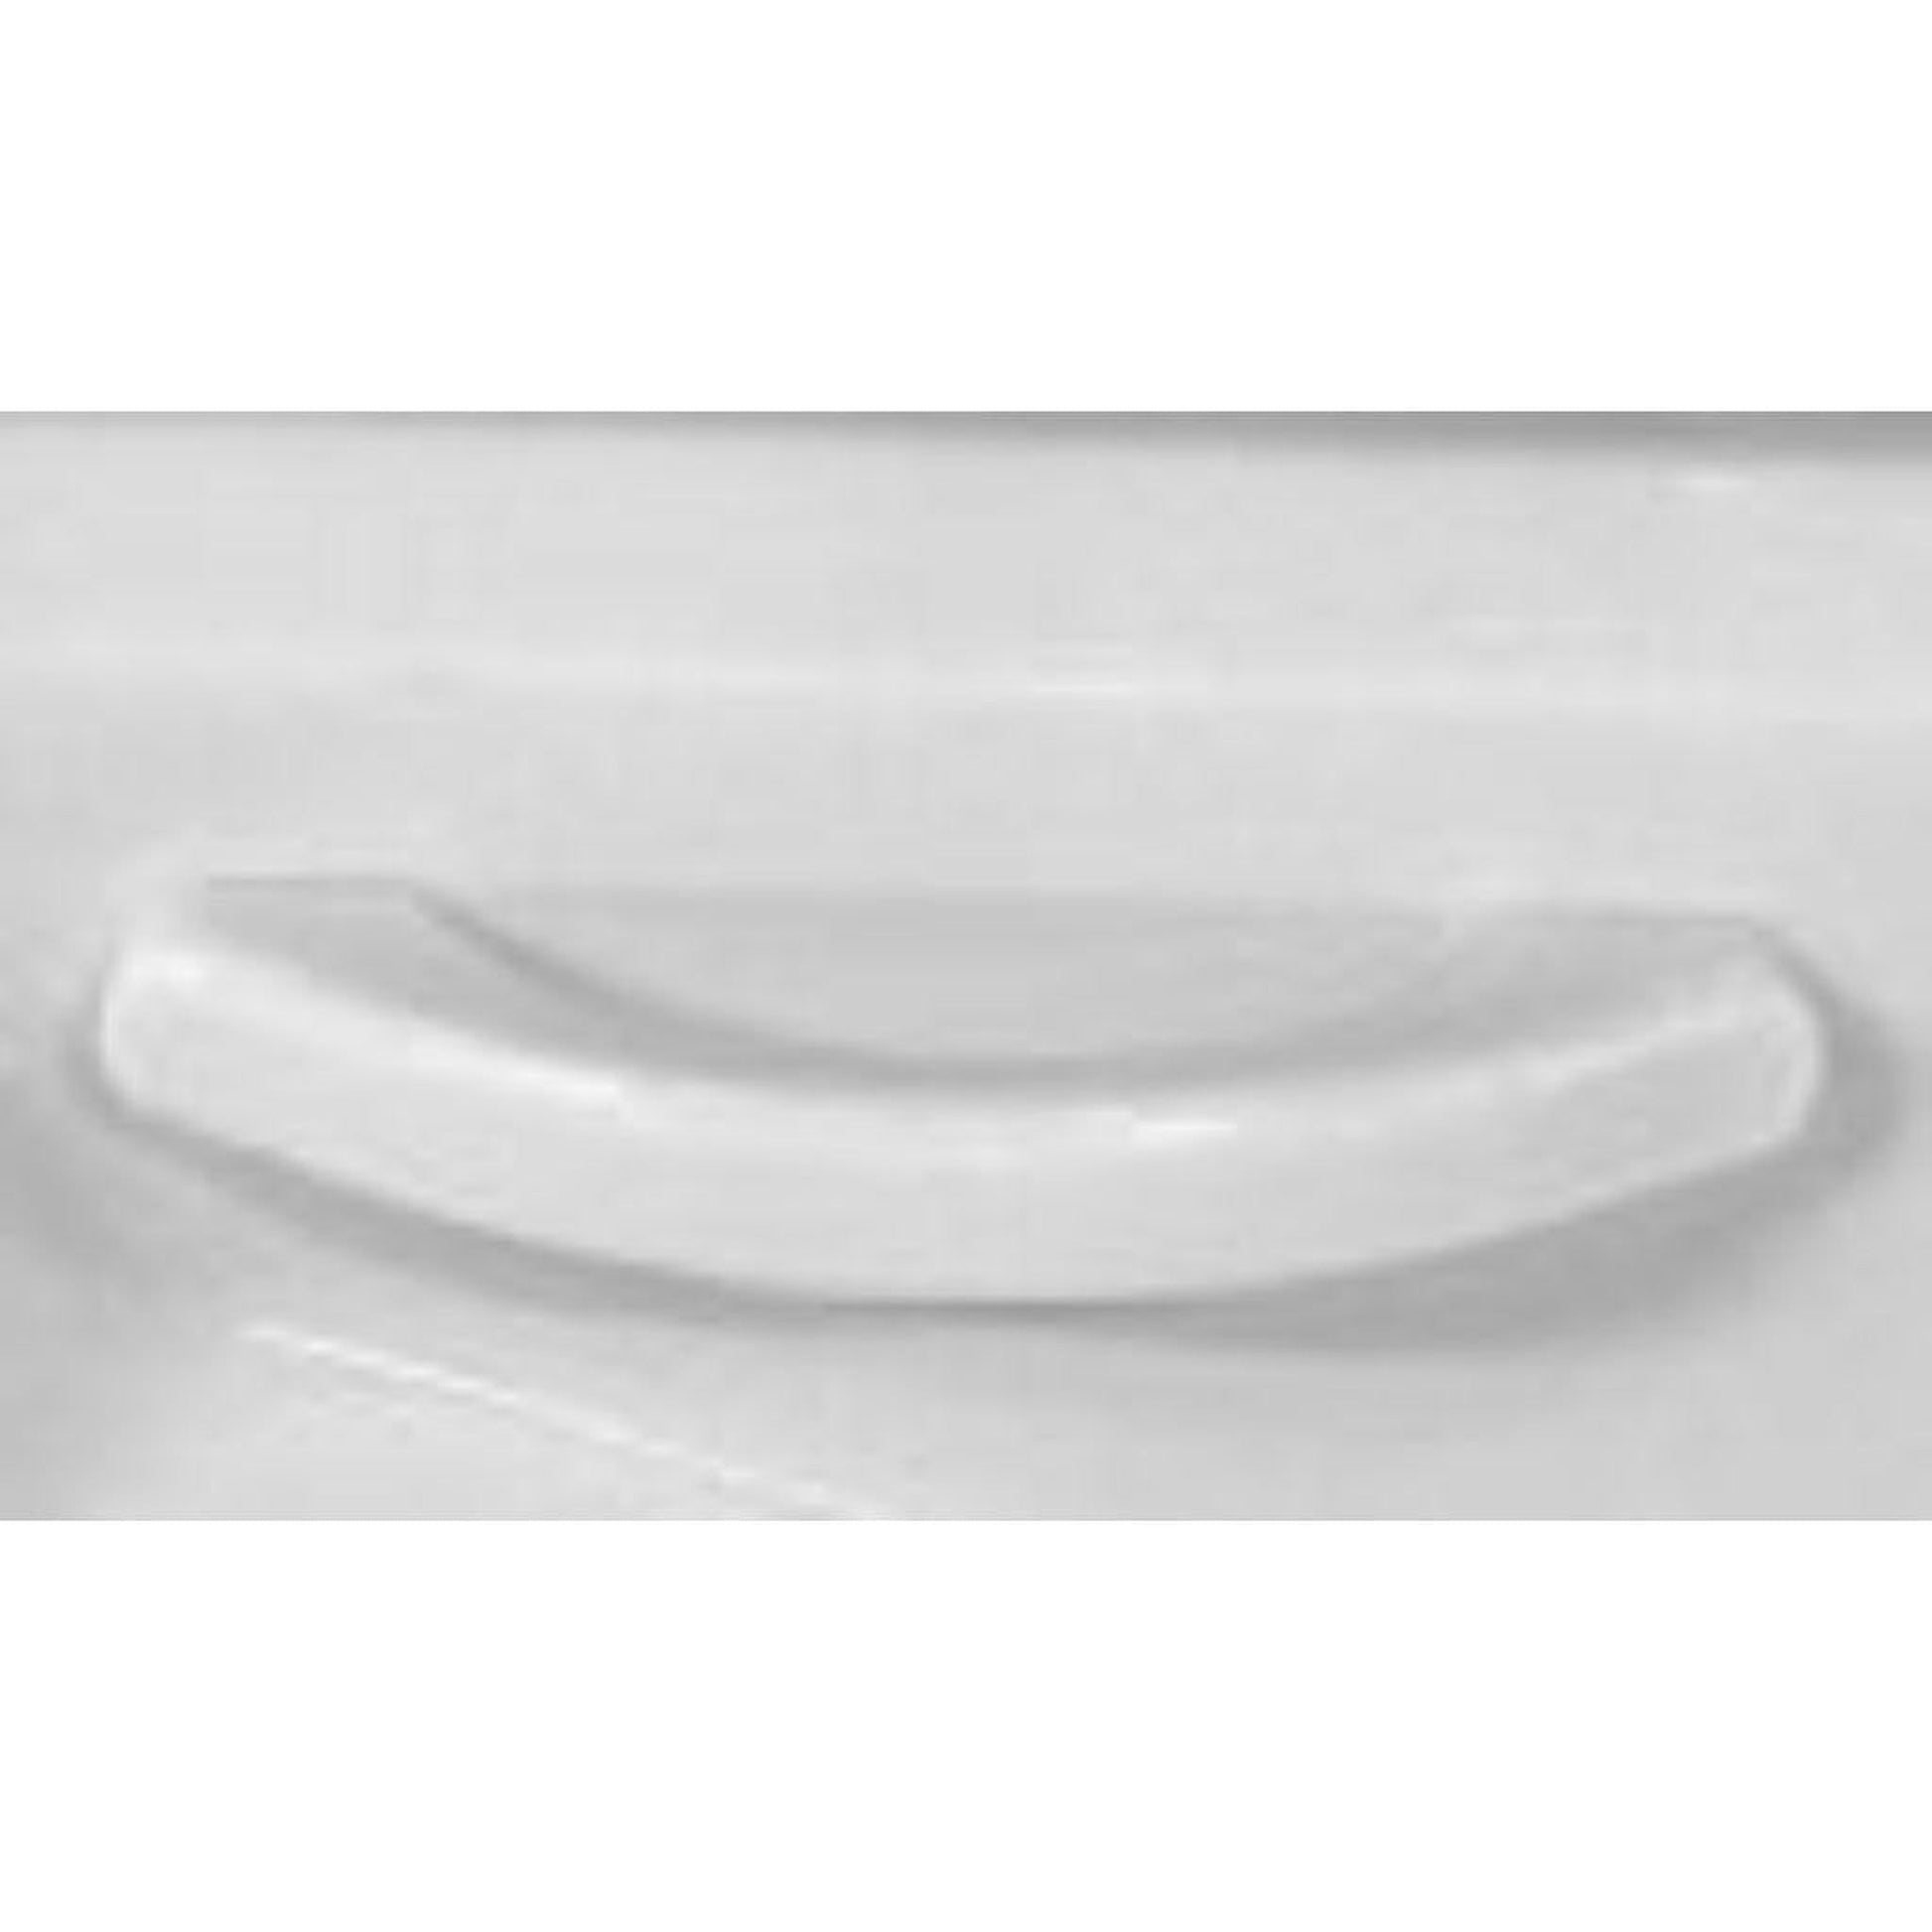 American Acrylic 59" x 31.5" White Rectangular Freestanding Soaking Bathtub